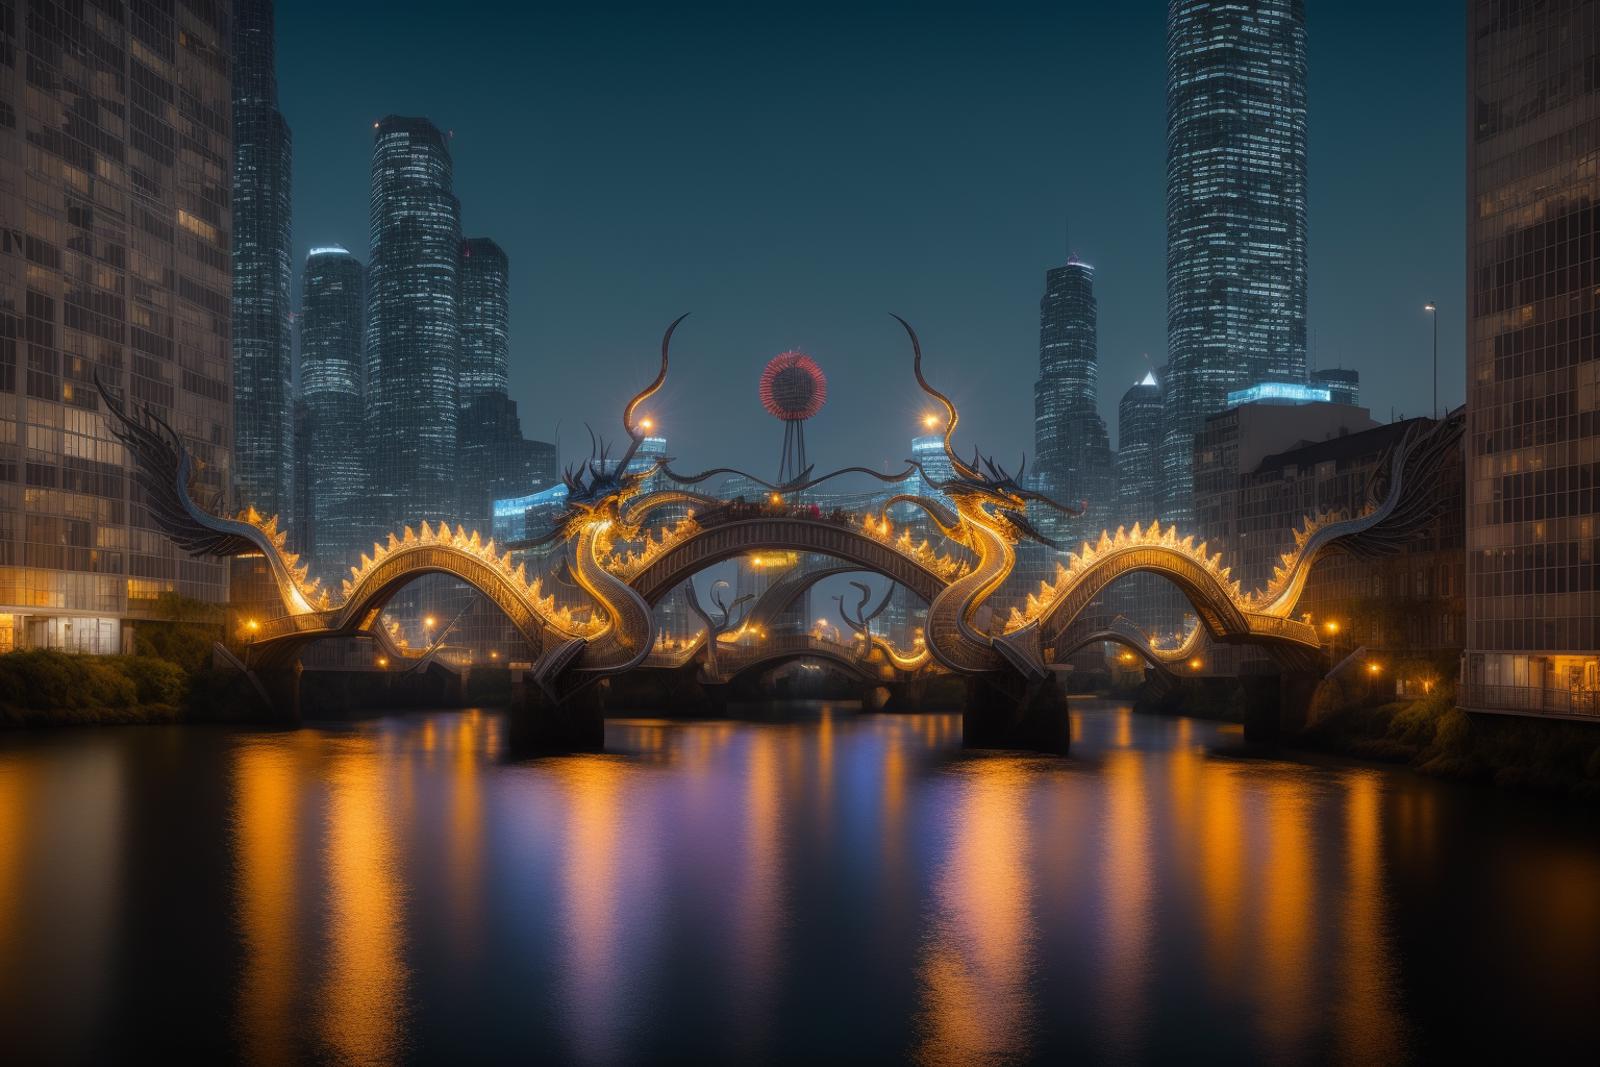 Illuminated Dragon Bridge in a City at Night